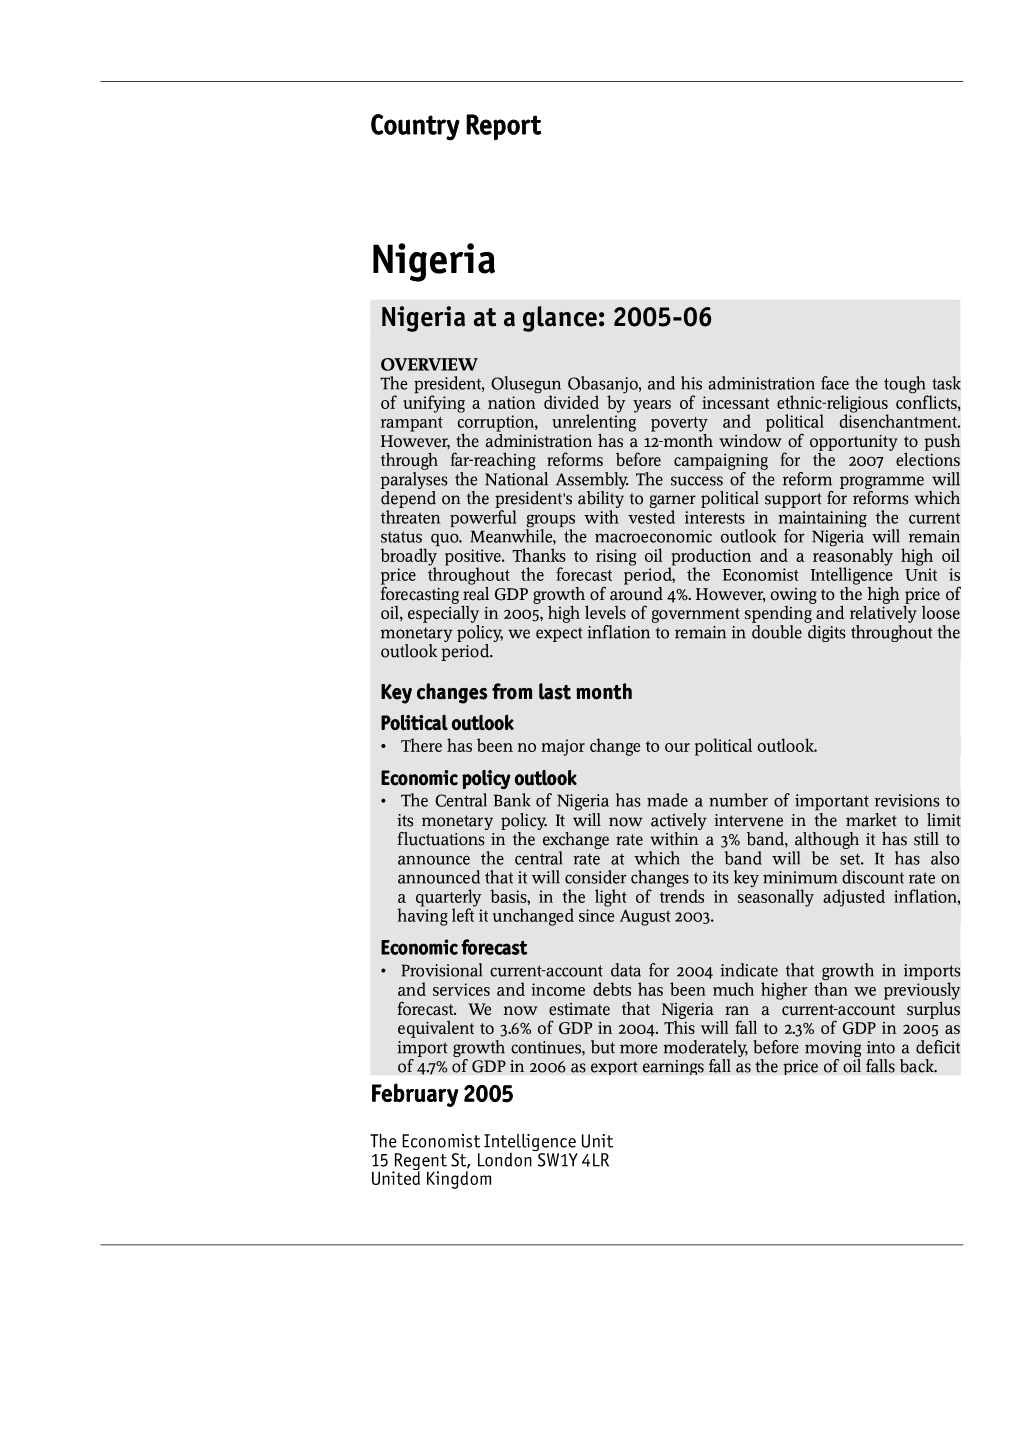 Nigeria Nigeria at a Glance: 2005-06